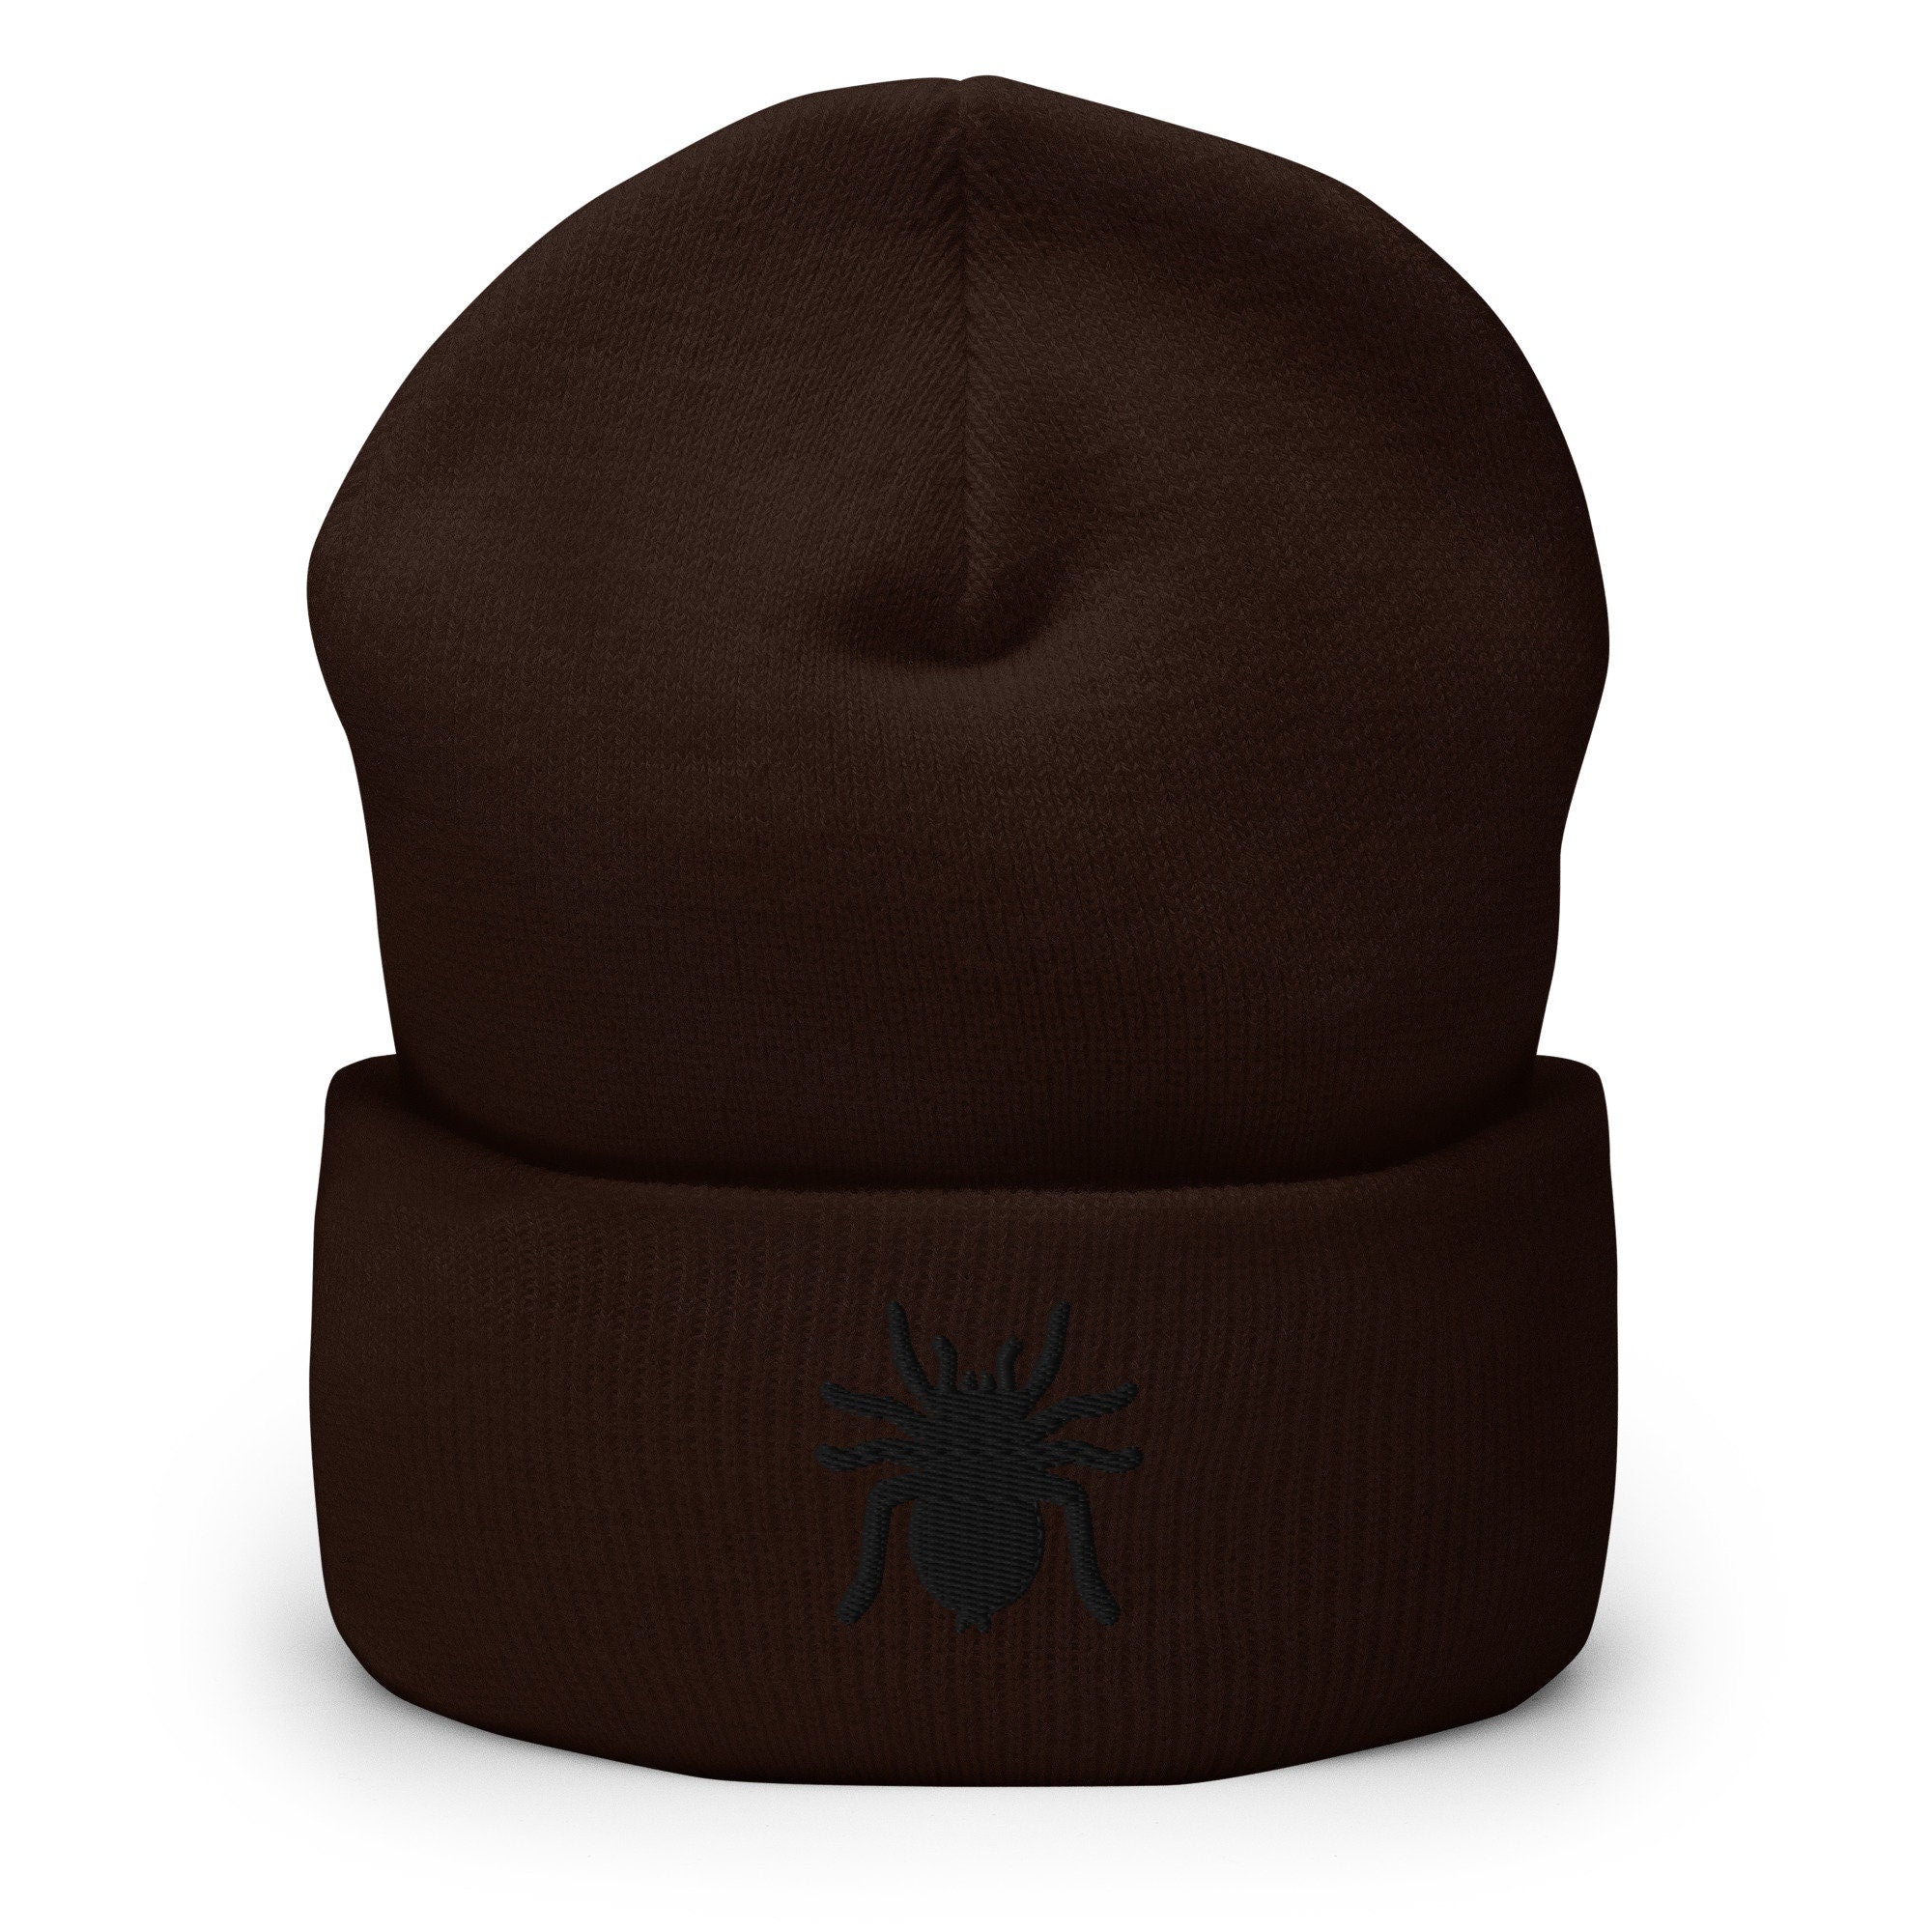 Tarantula Arachnid Embroidered Beanie, Handmade Cuffed Knit Unisex Slouchy Adult Winter Hat Cap Gift